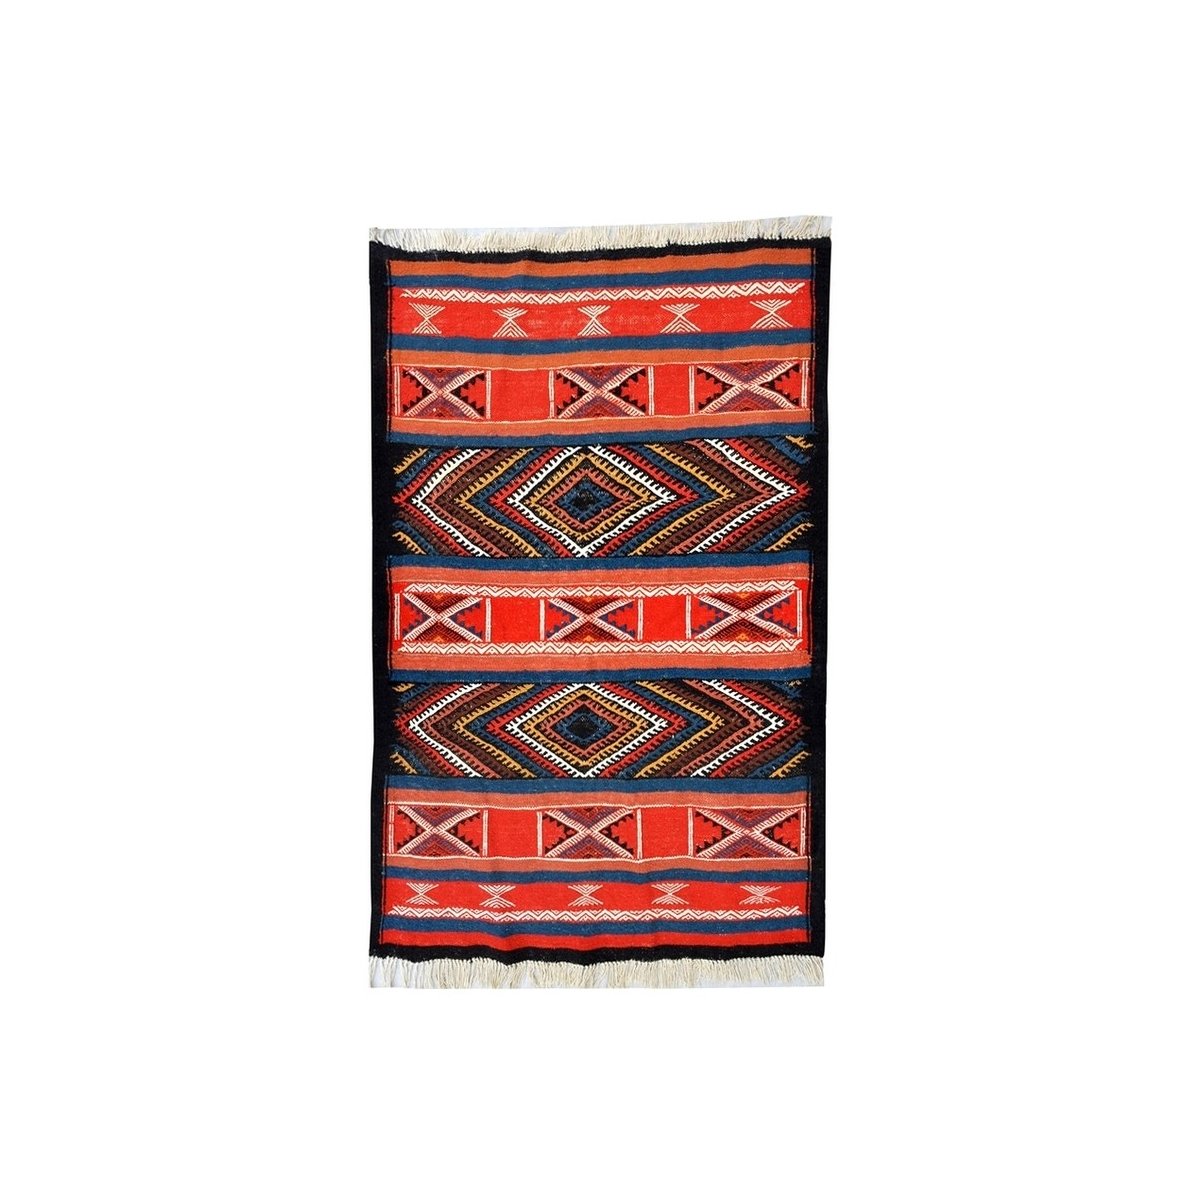 Tapete berbere Tapete Kilim Akil 77x105 Multicor (Tecidos à mão, Lã) Tapete tunisiano kilim, estilo marroquino. Tapete retangula